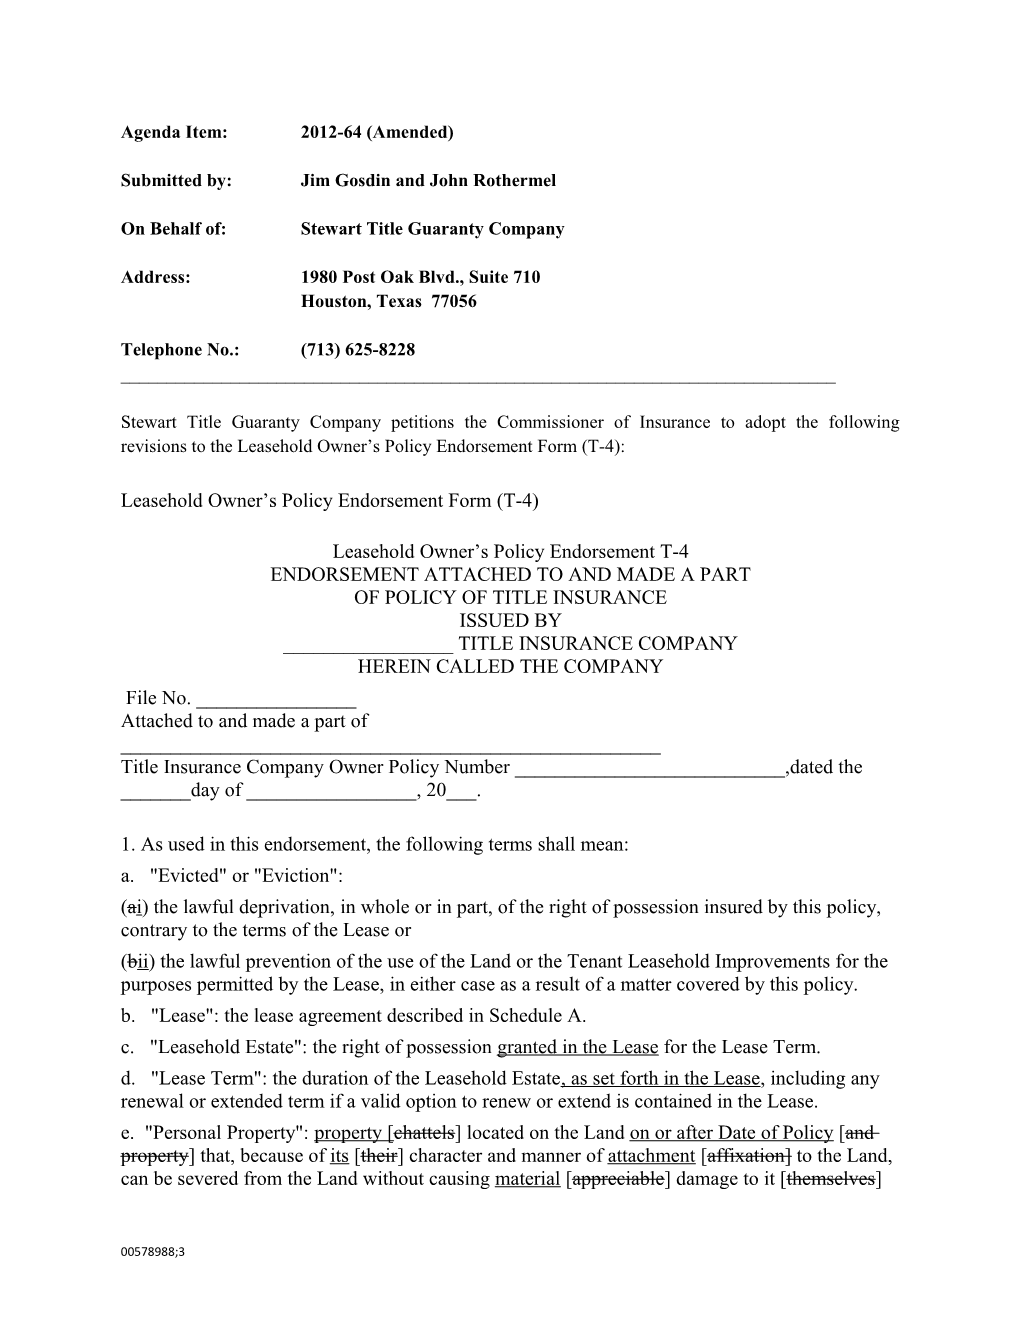 STGC Agenda Item 2012-64 Amendment to T-4 (Amended) (00578988-3)